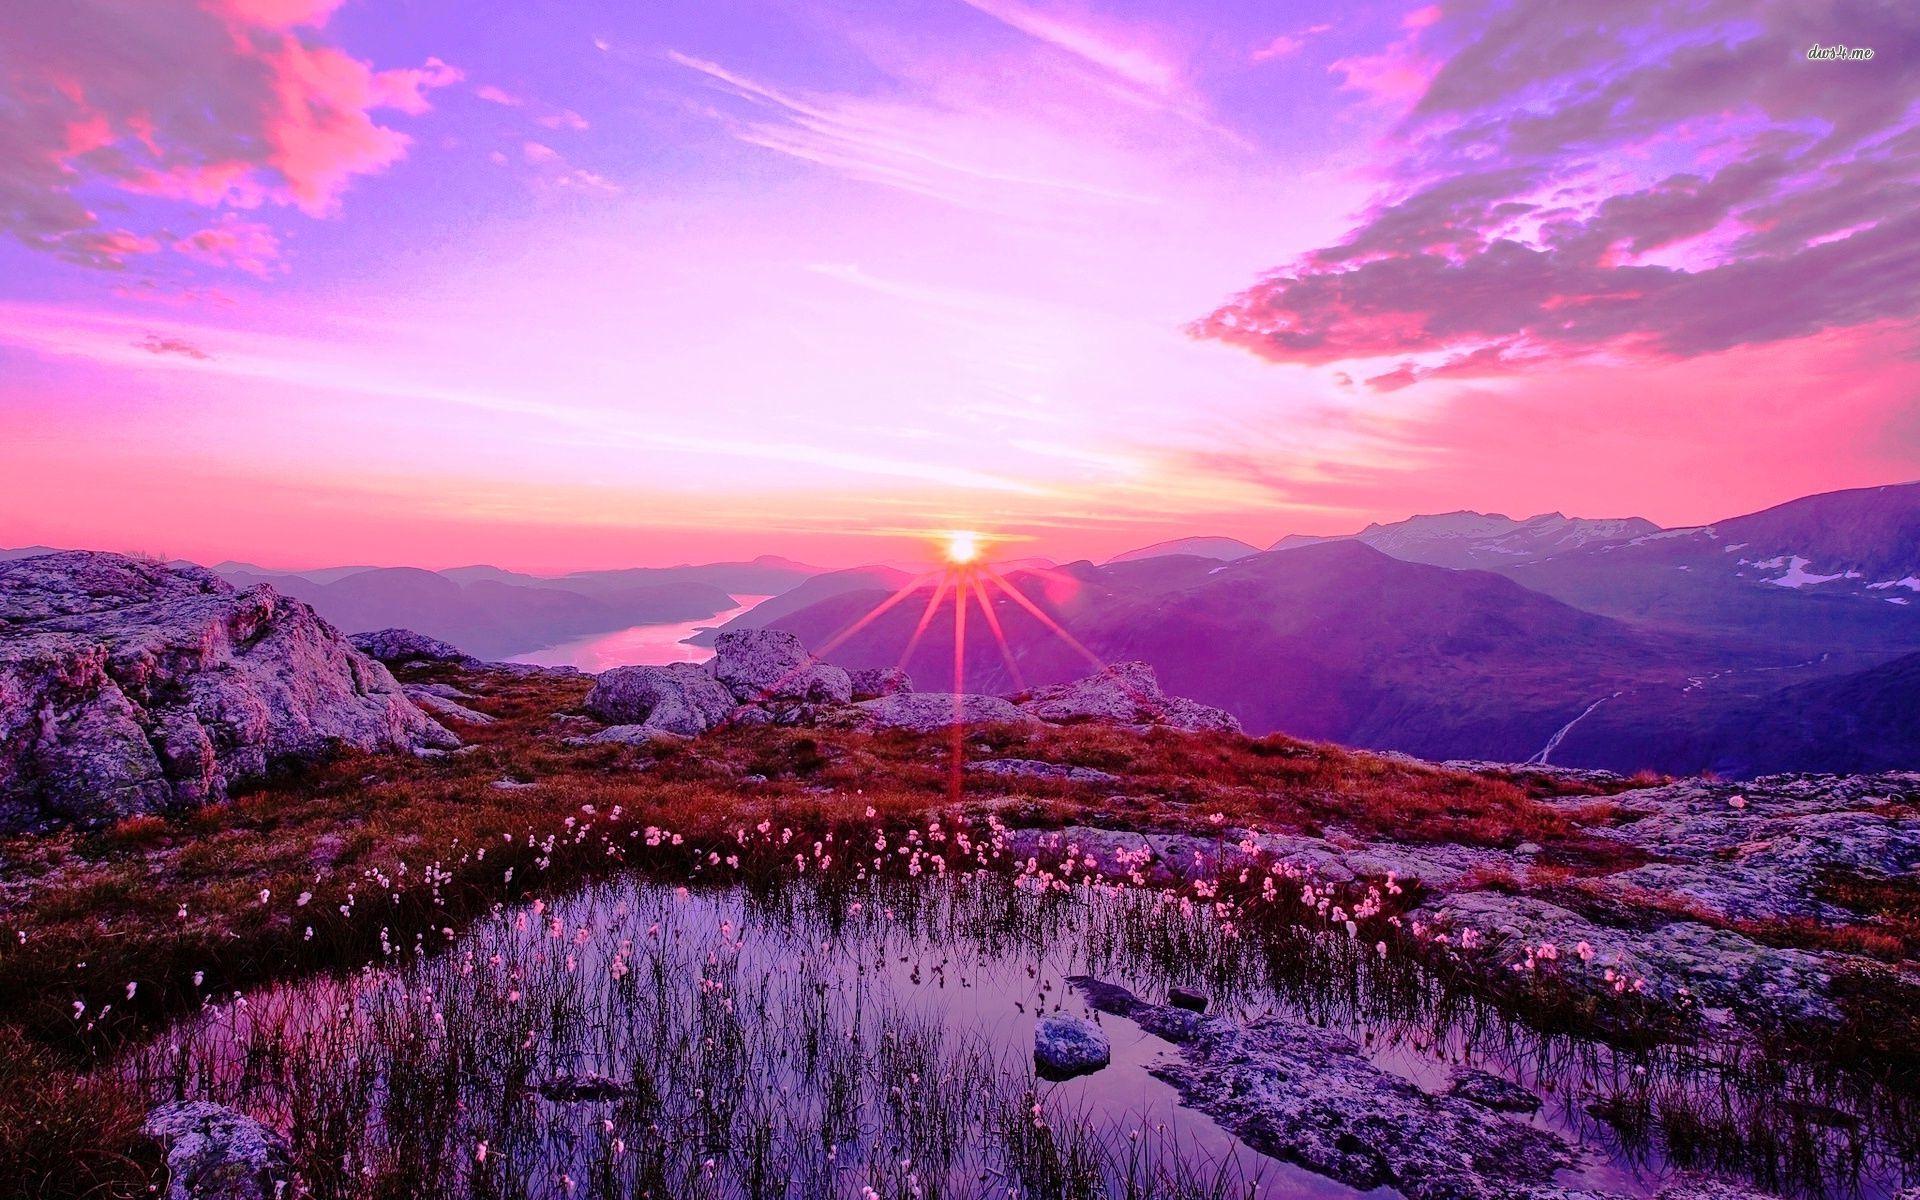 Purple Mountain Images - Free Download on Freepik